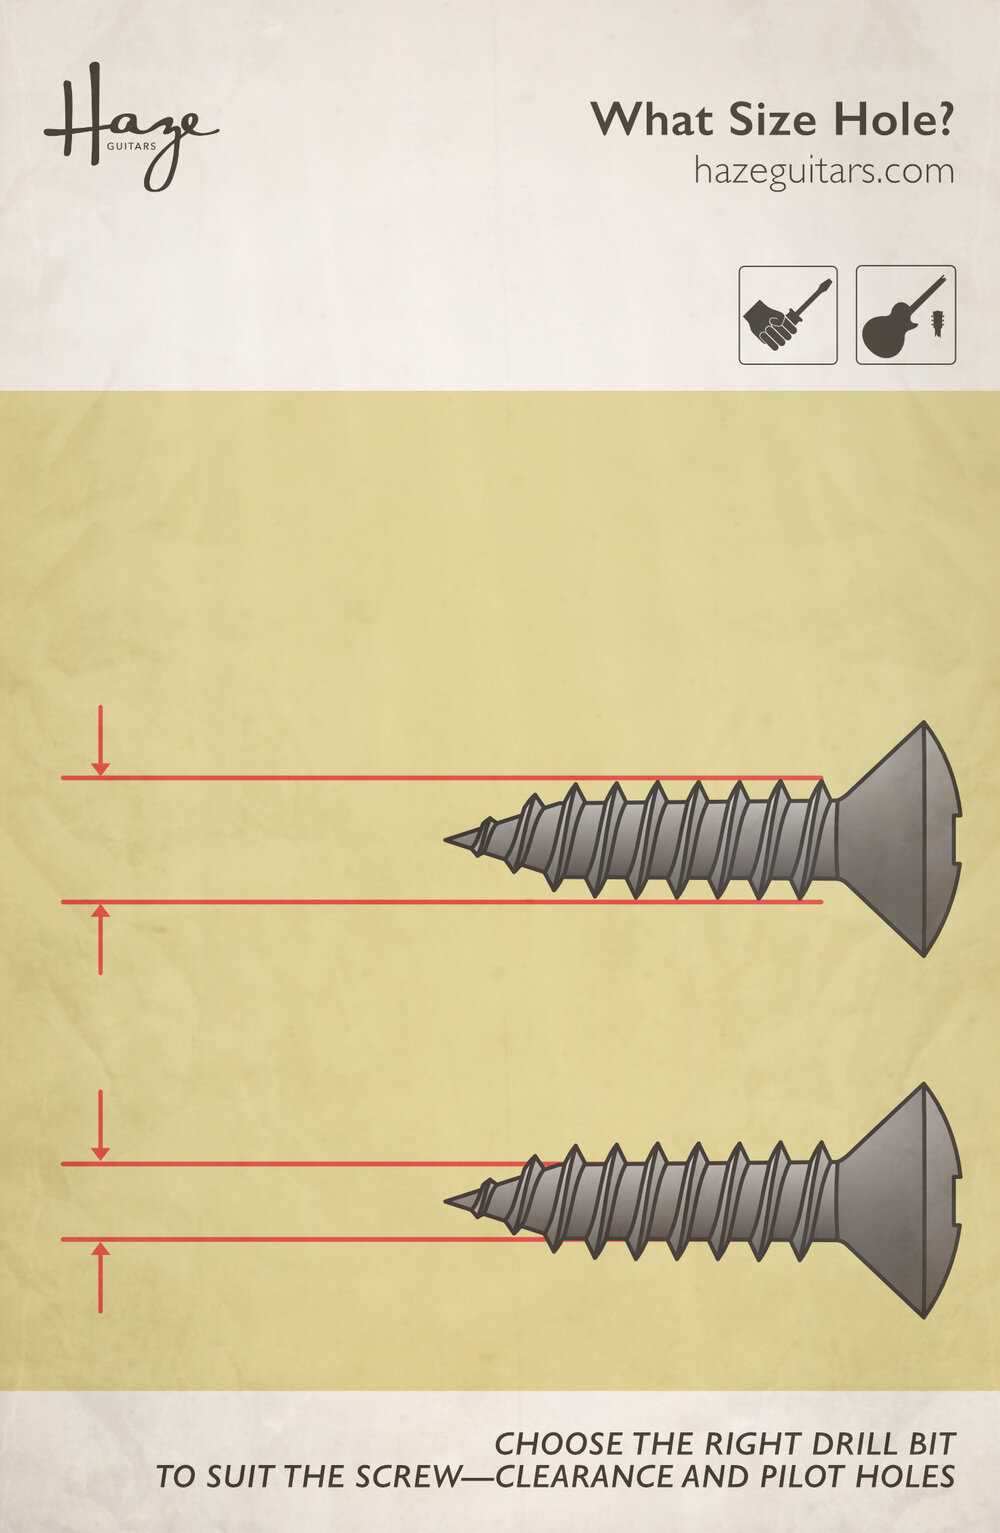 4. Use a Drill Bit Size Chart